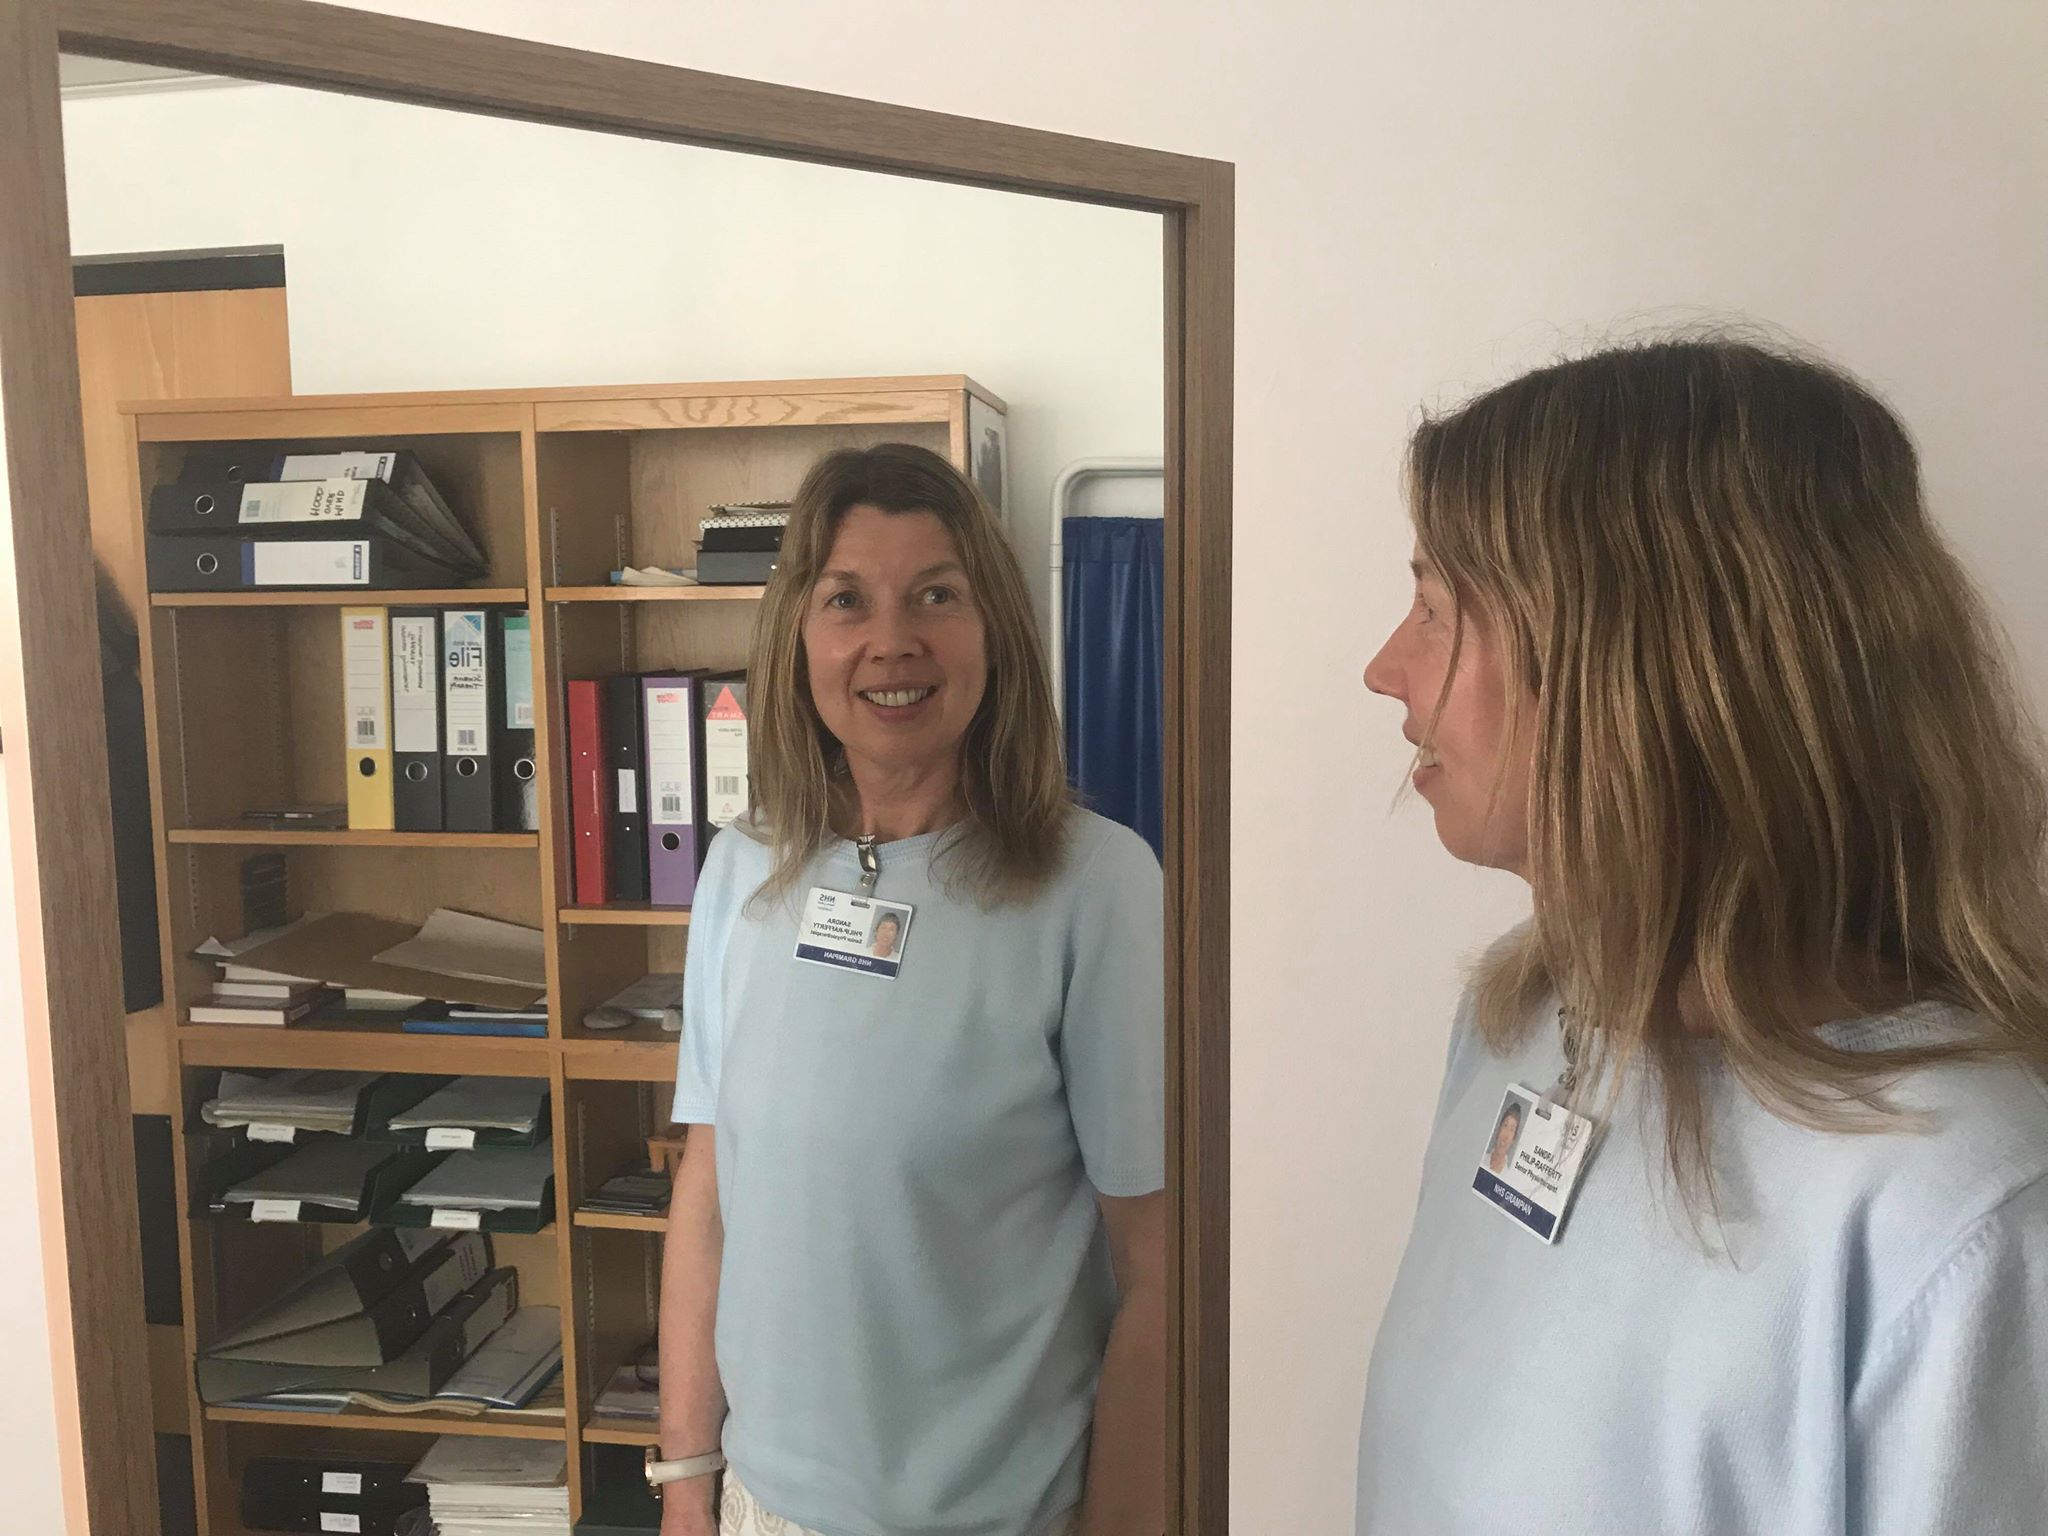 Sandra Philip-Rafferty runs "mirror therapy" classes to help treat eating disorders